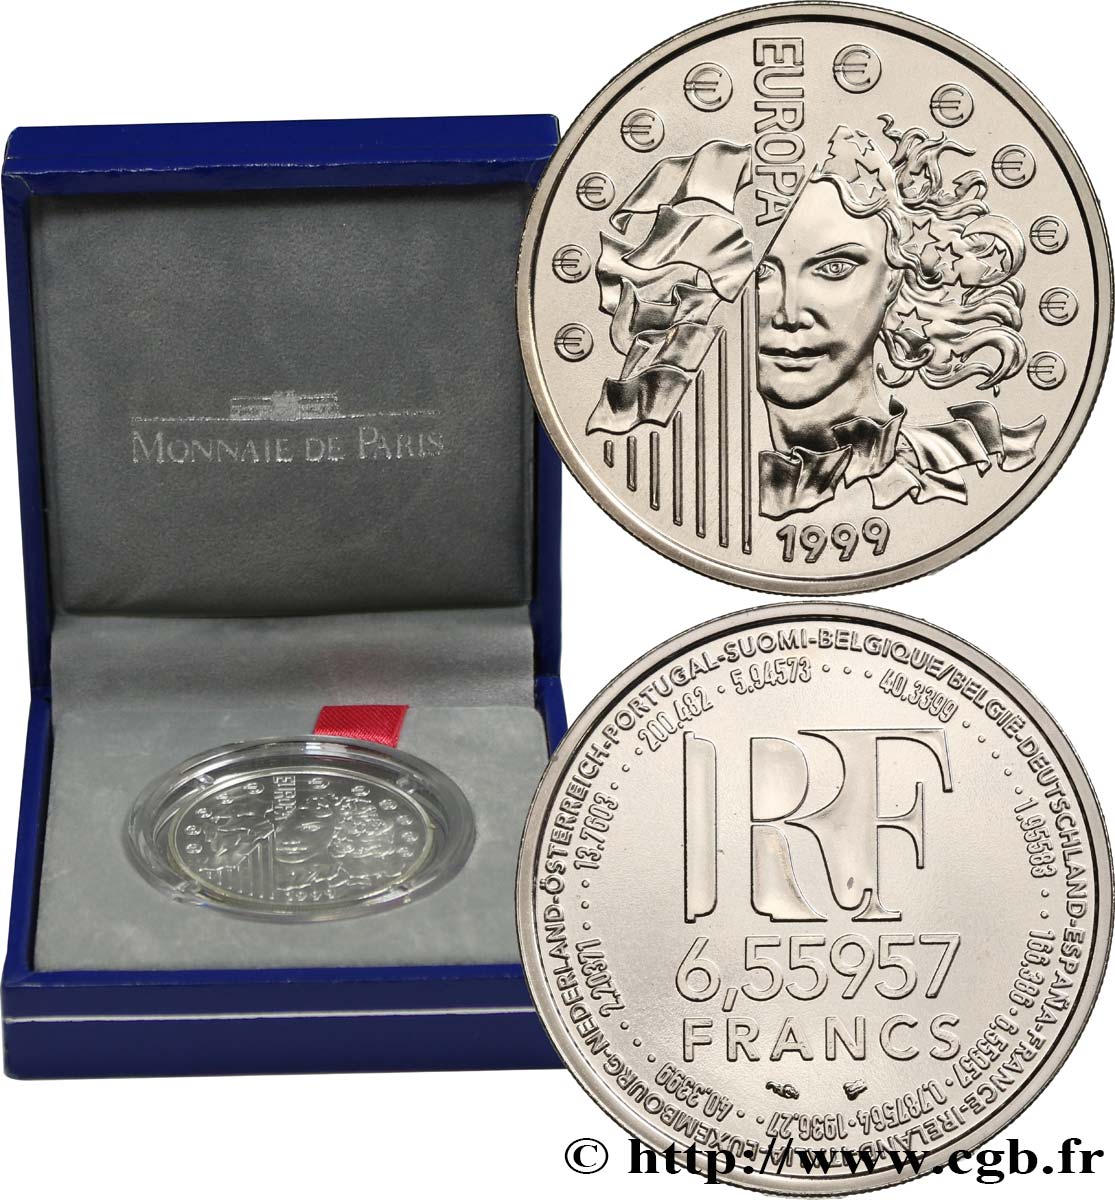 Brillant Universel 6,55957 francs - La parité 1999 Paris F.1250 2 FDC 